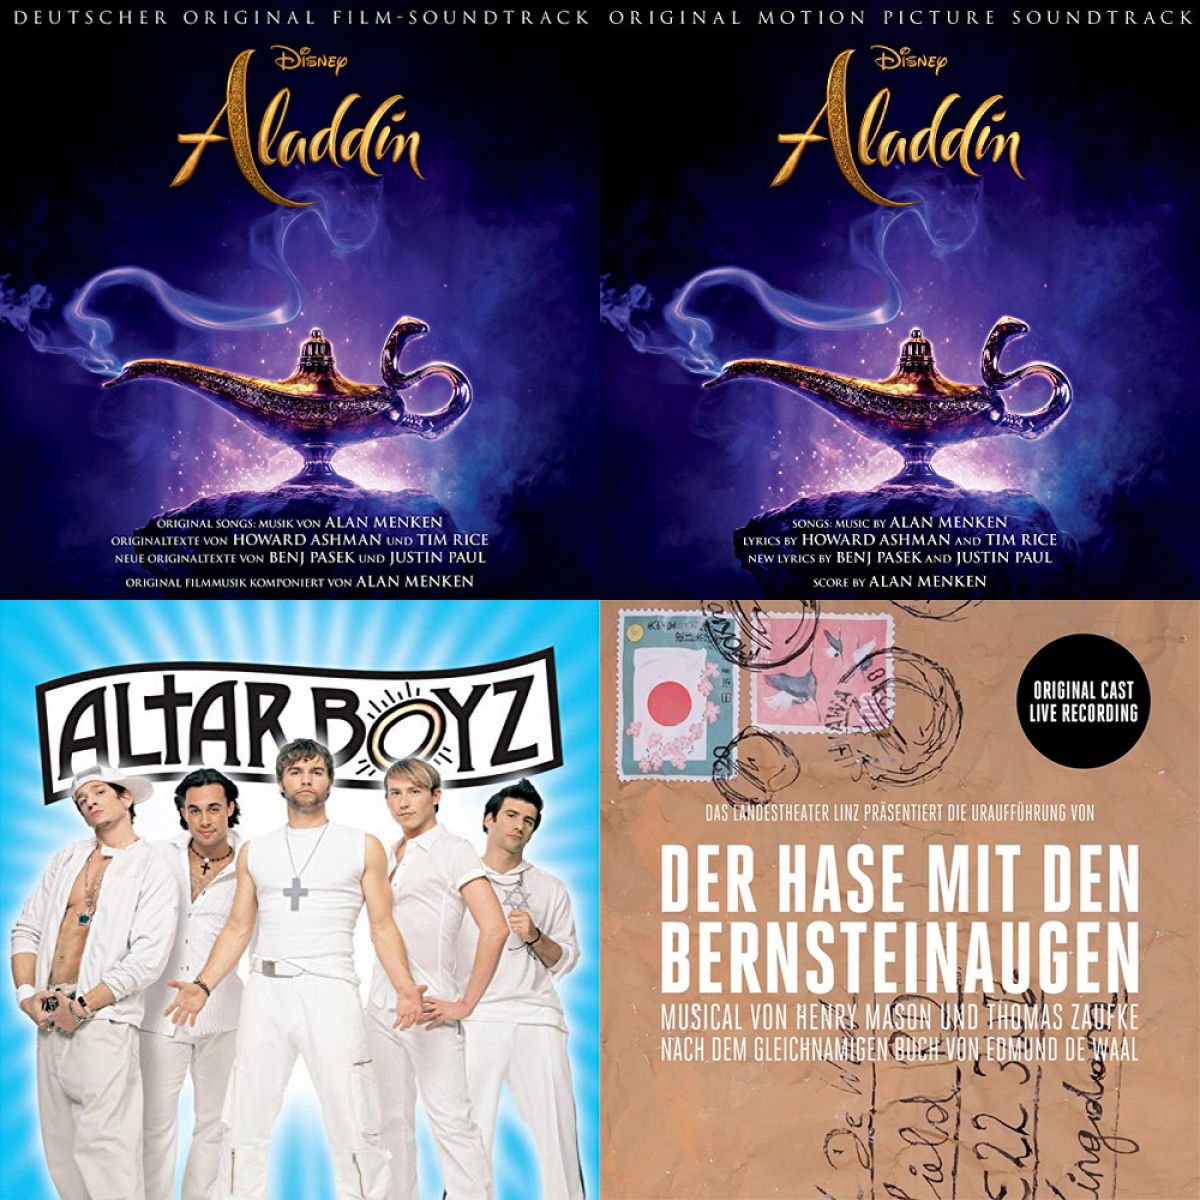 a8299b50549935ba2e46d7d395abc9bb_XL Update der Musikwunschdatenbank - musicalradio.de | Musicals kostenlos im Radio